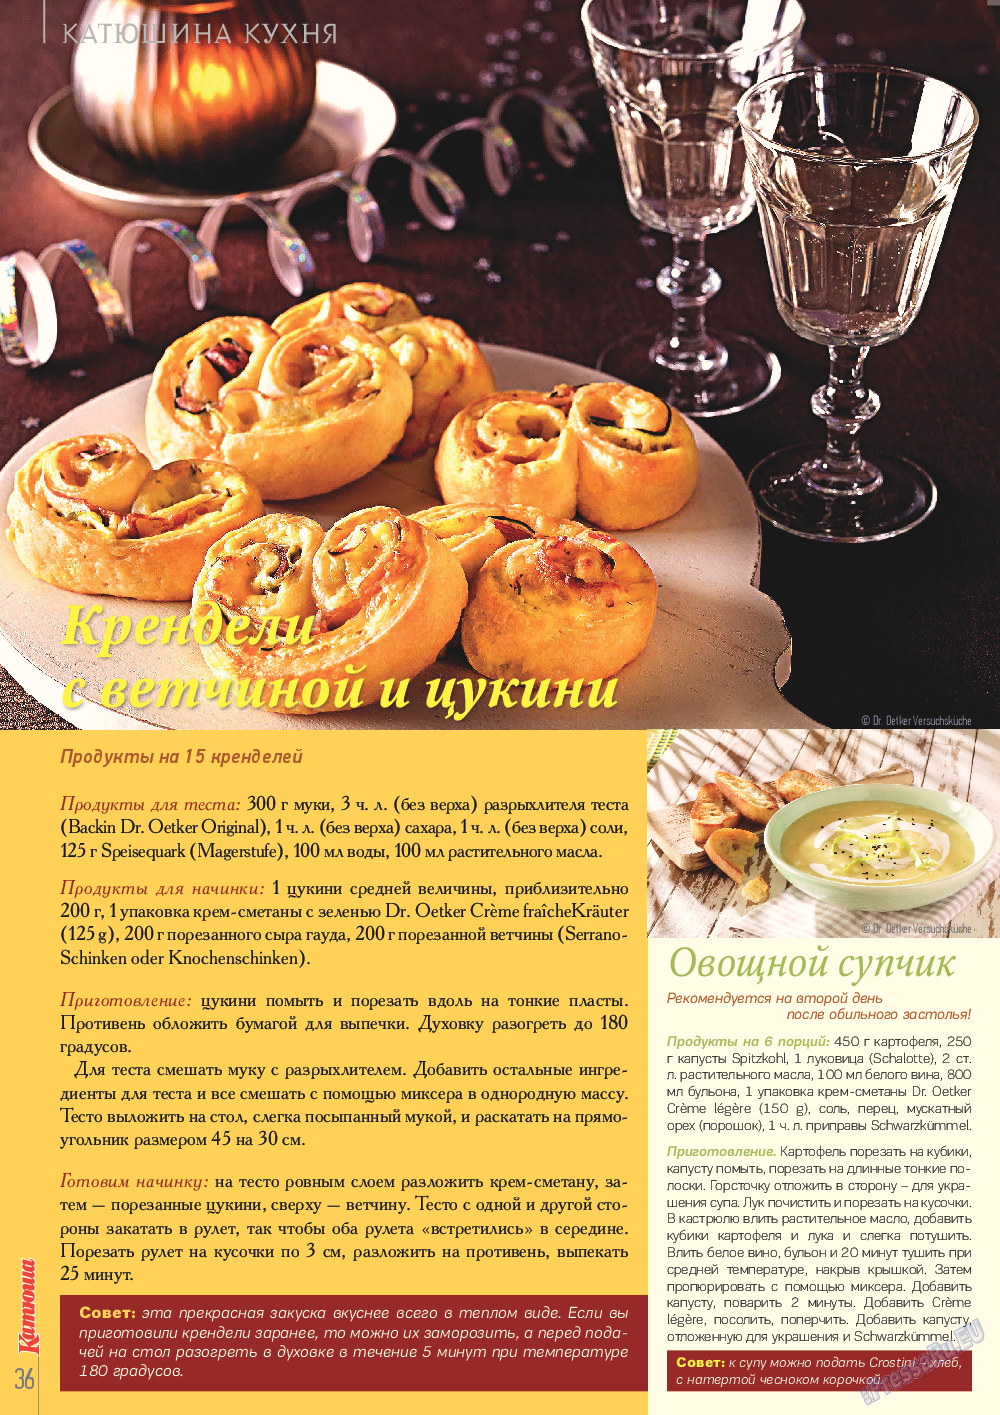 Катюша, журнал. 2014 №42 стр.36